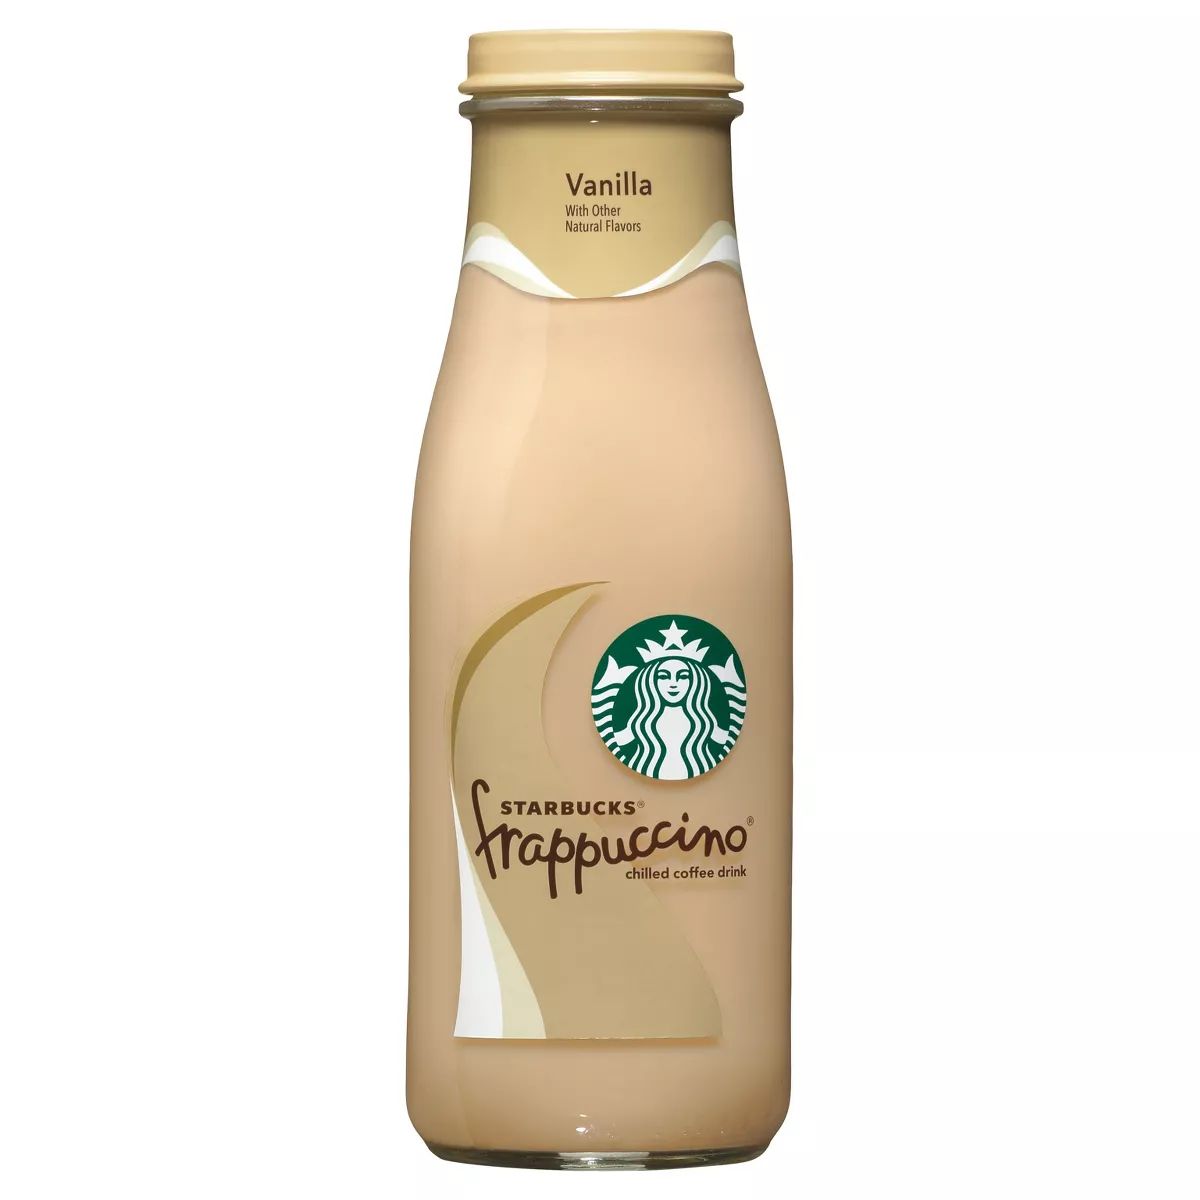 Starbucks Frappuccino Vanilla Chilled Coffee Drink - 13.7 fl oz Glass Bottle | Target